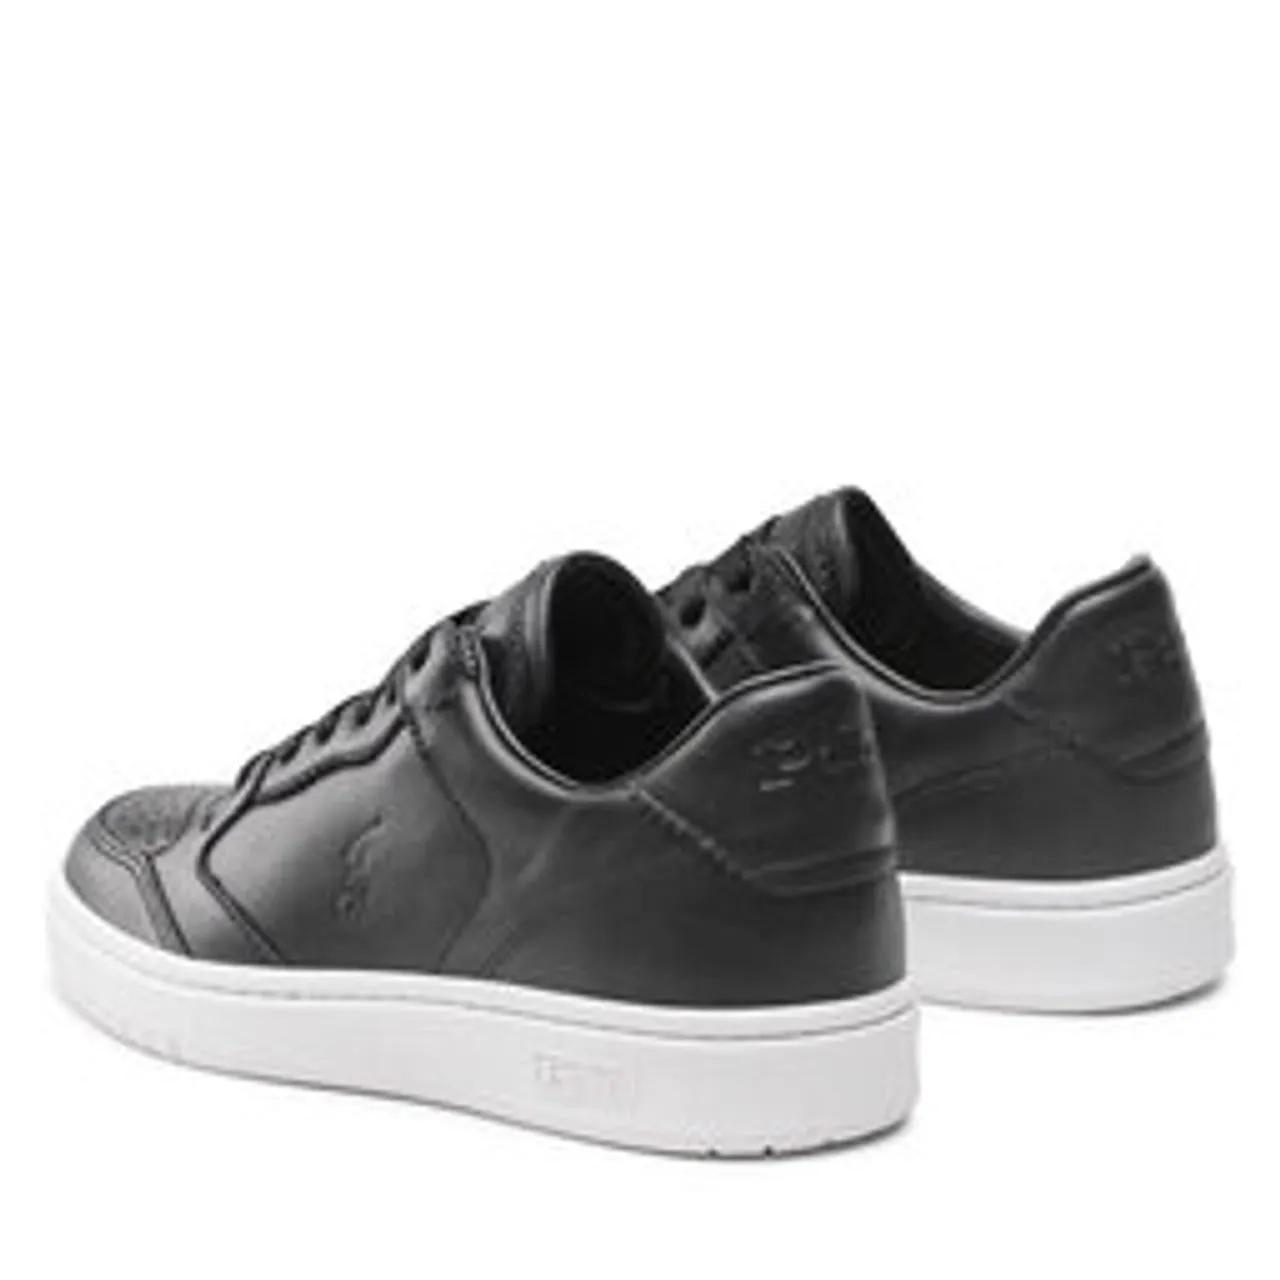 Sneakers Polo Ralph Lauren Polo Crt Lux 809845139002 Black